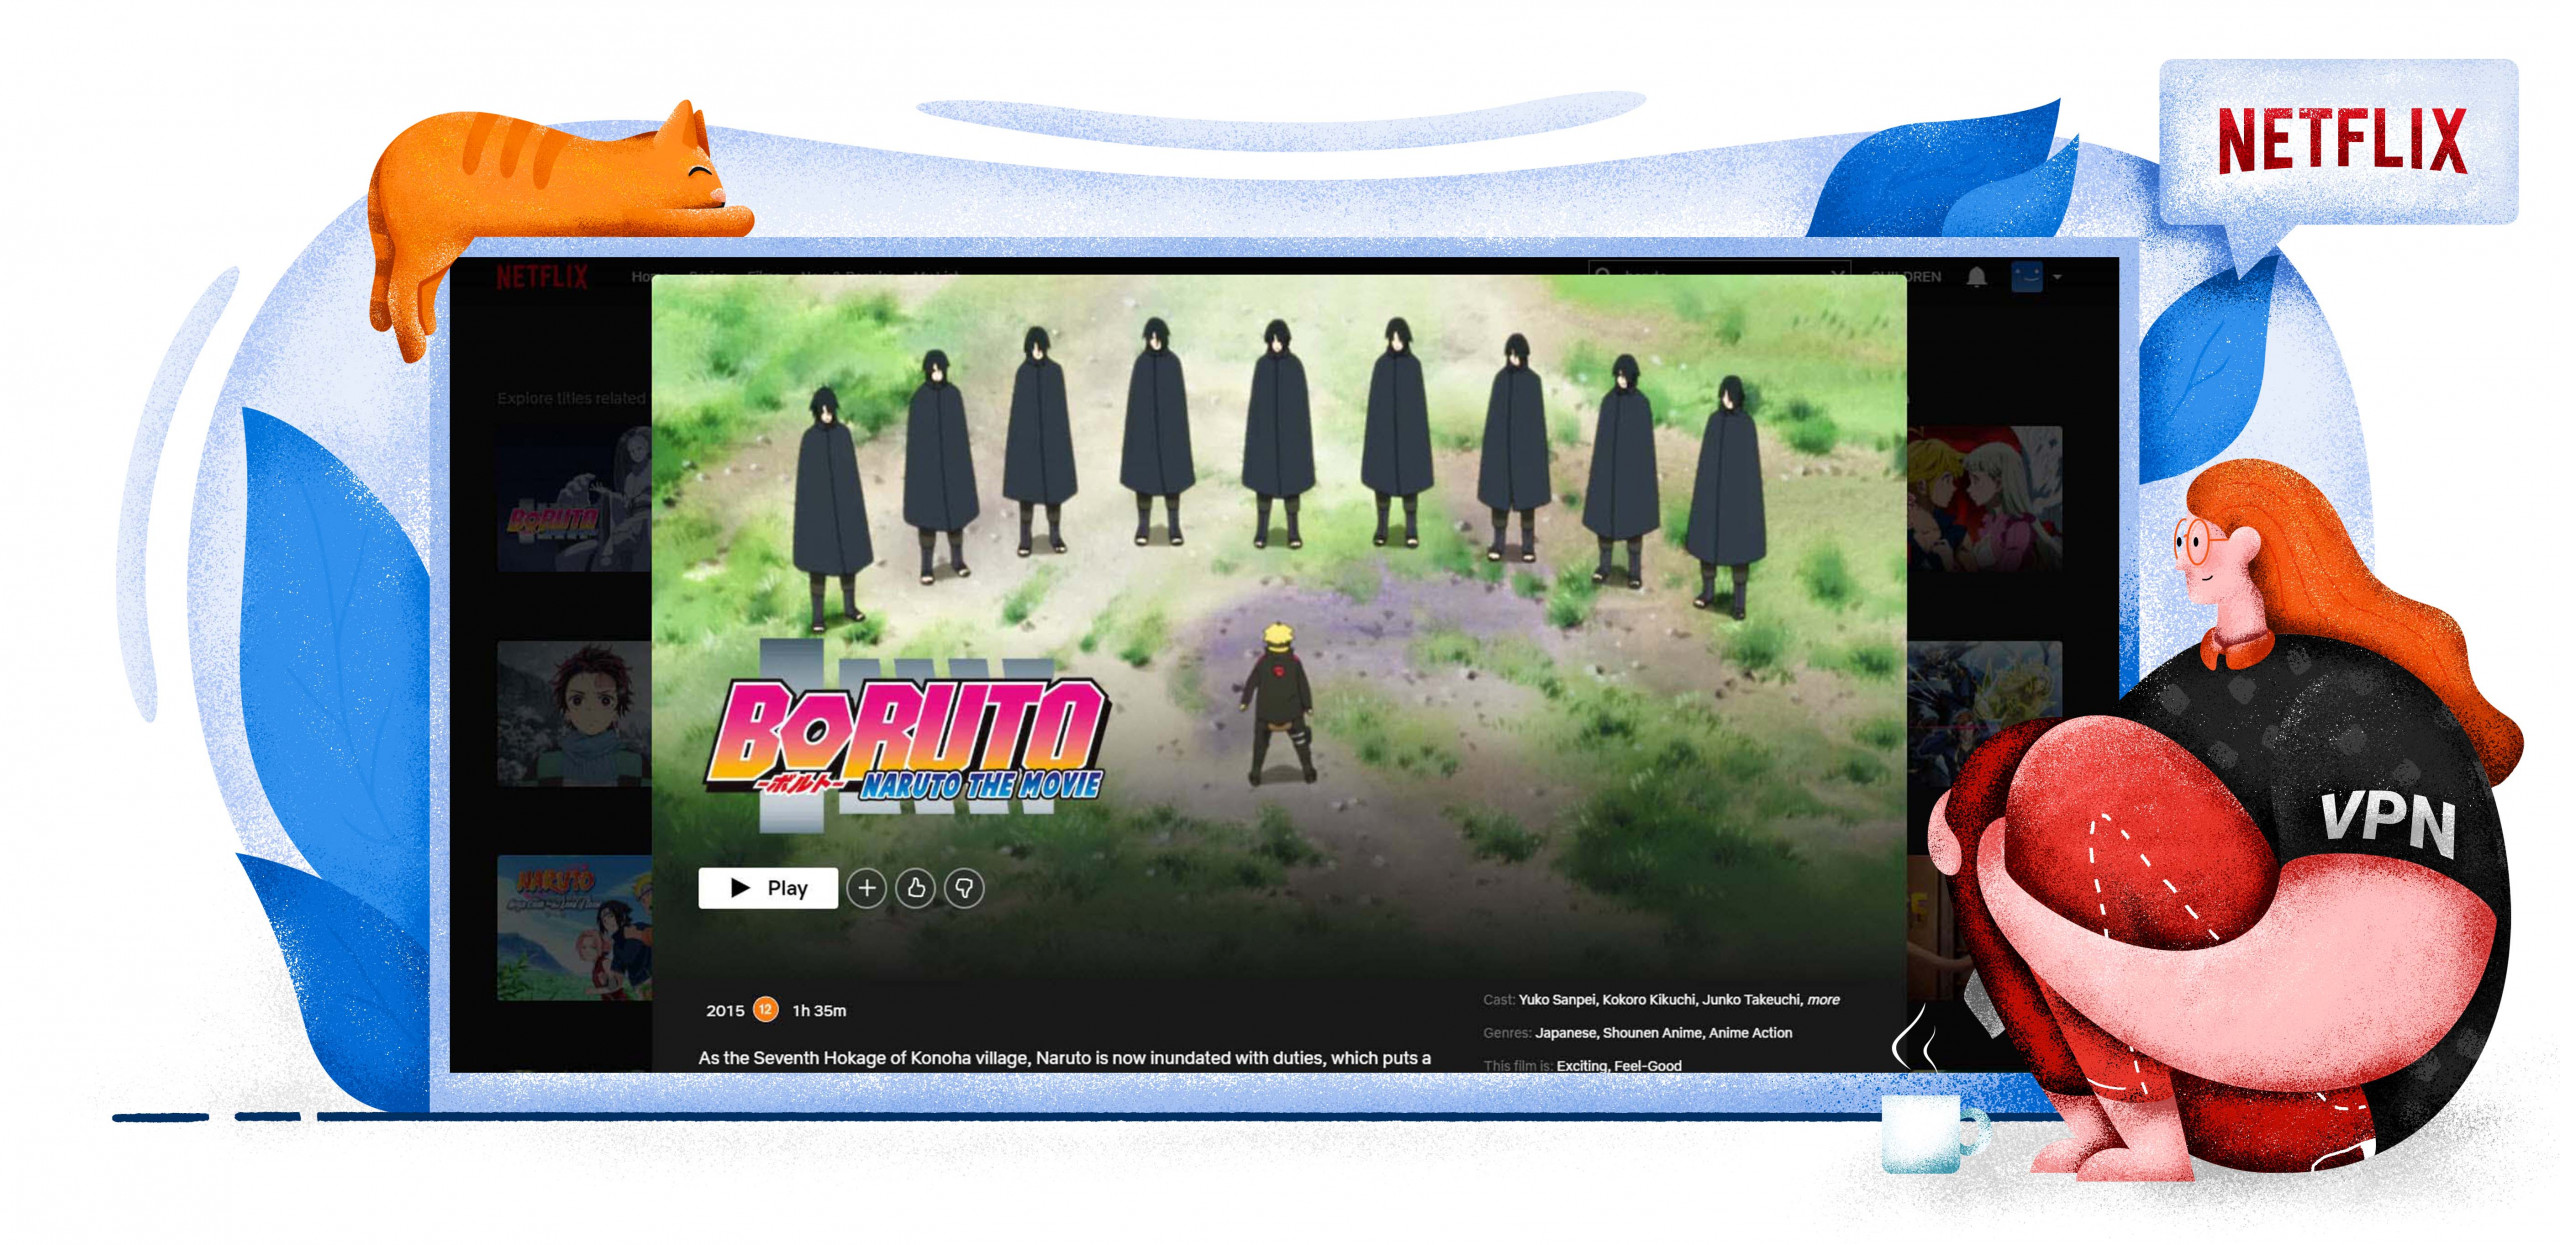 Netflix streamt Boruto: Naruto the Movie in Japan